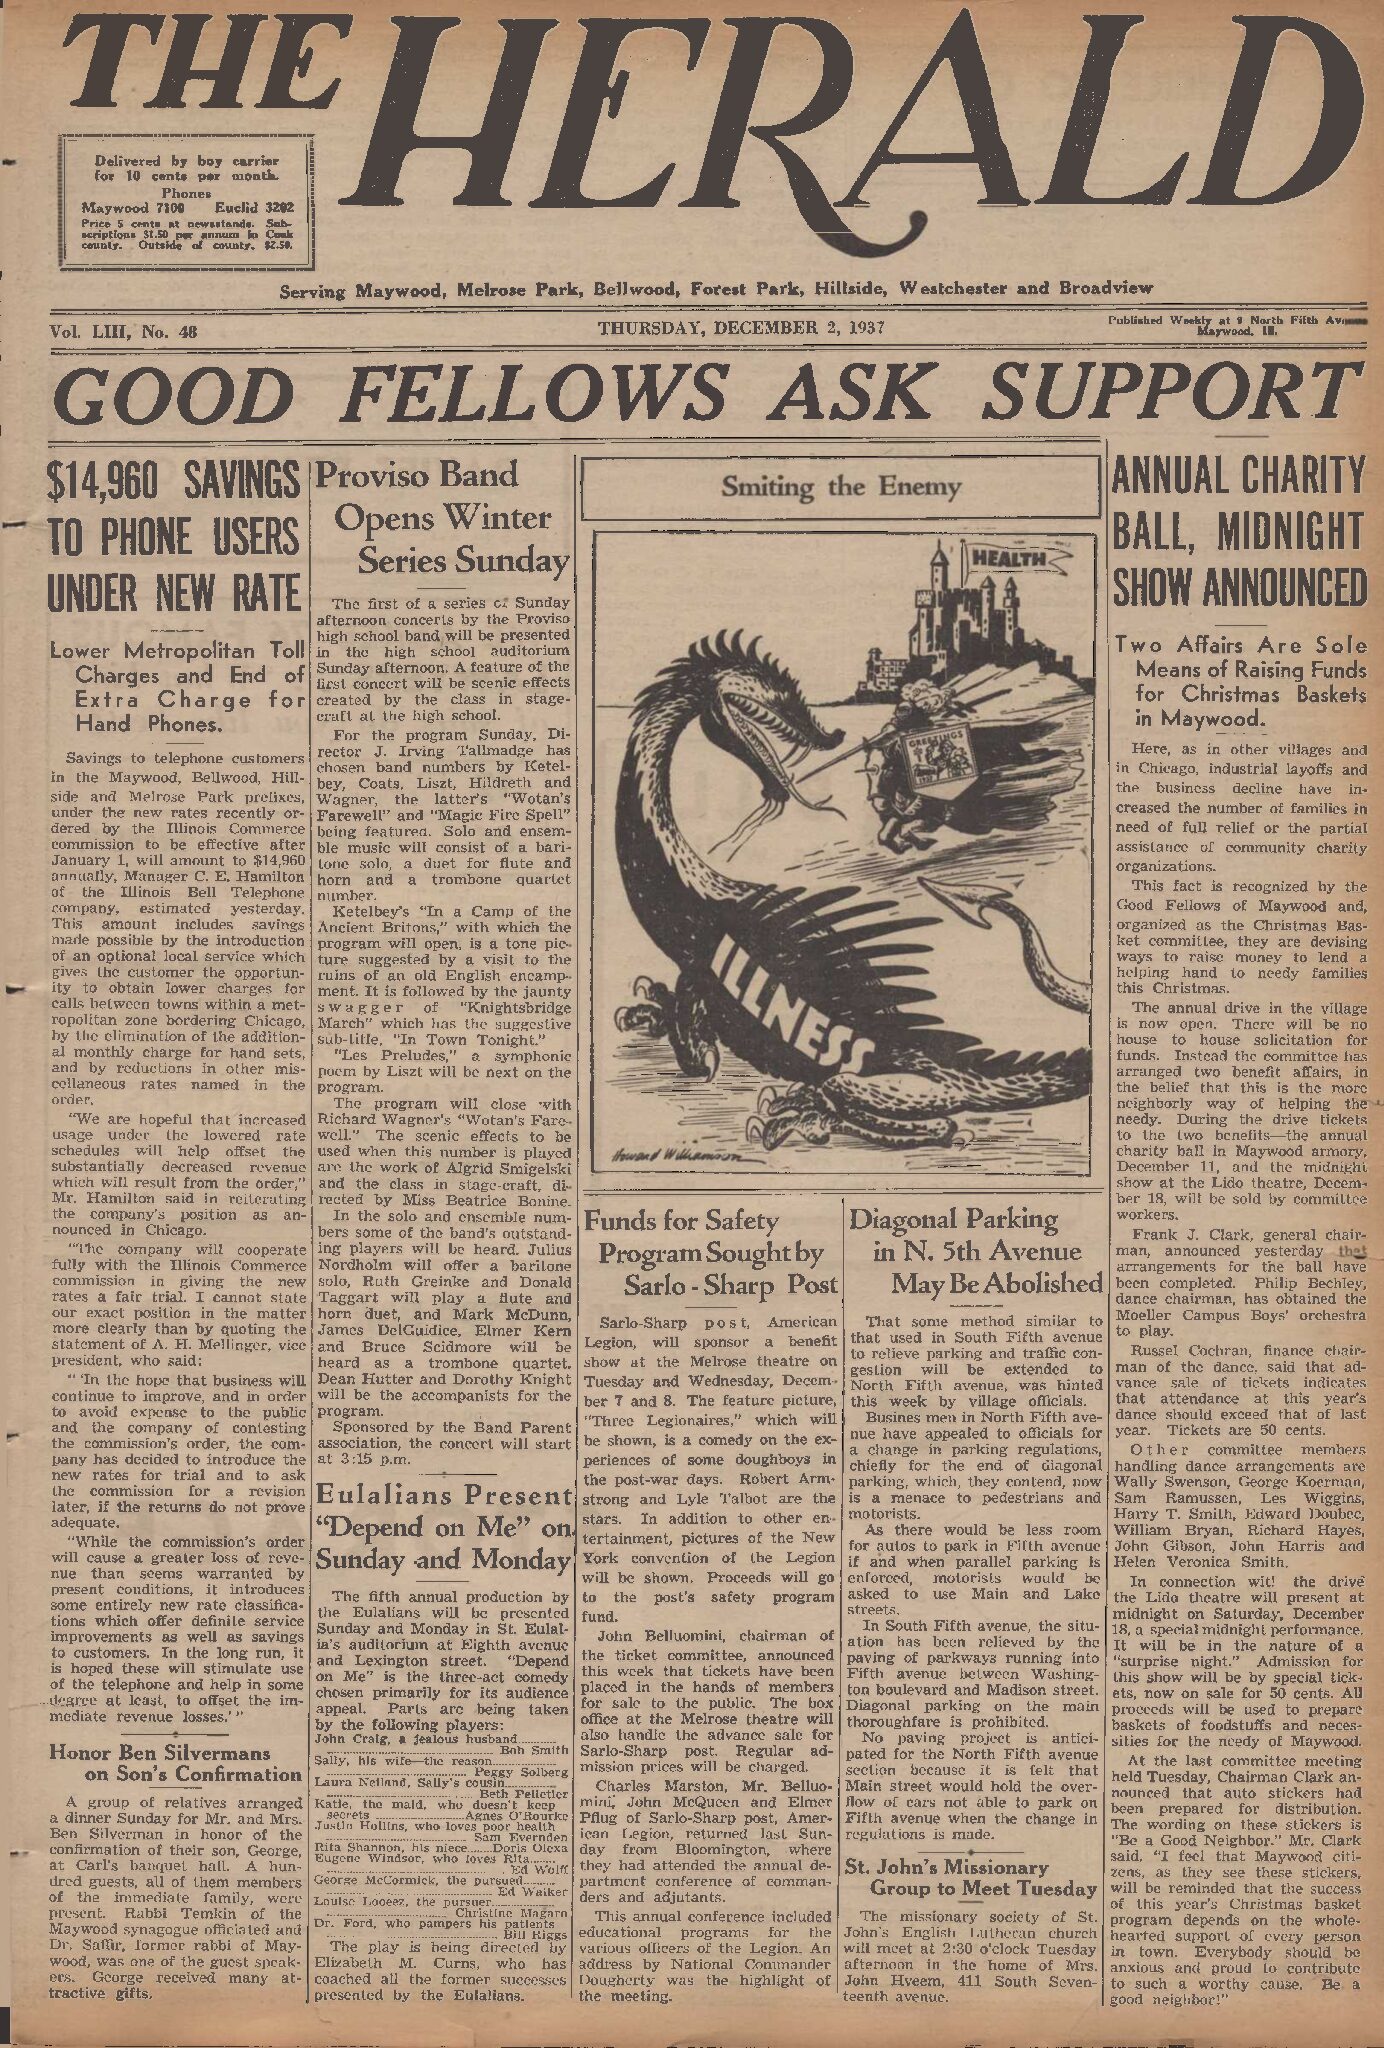 The Herald – 19371202